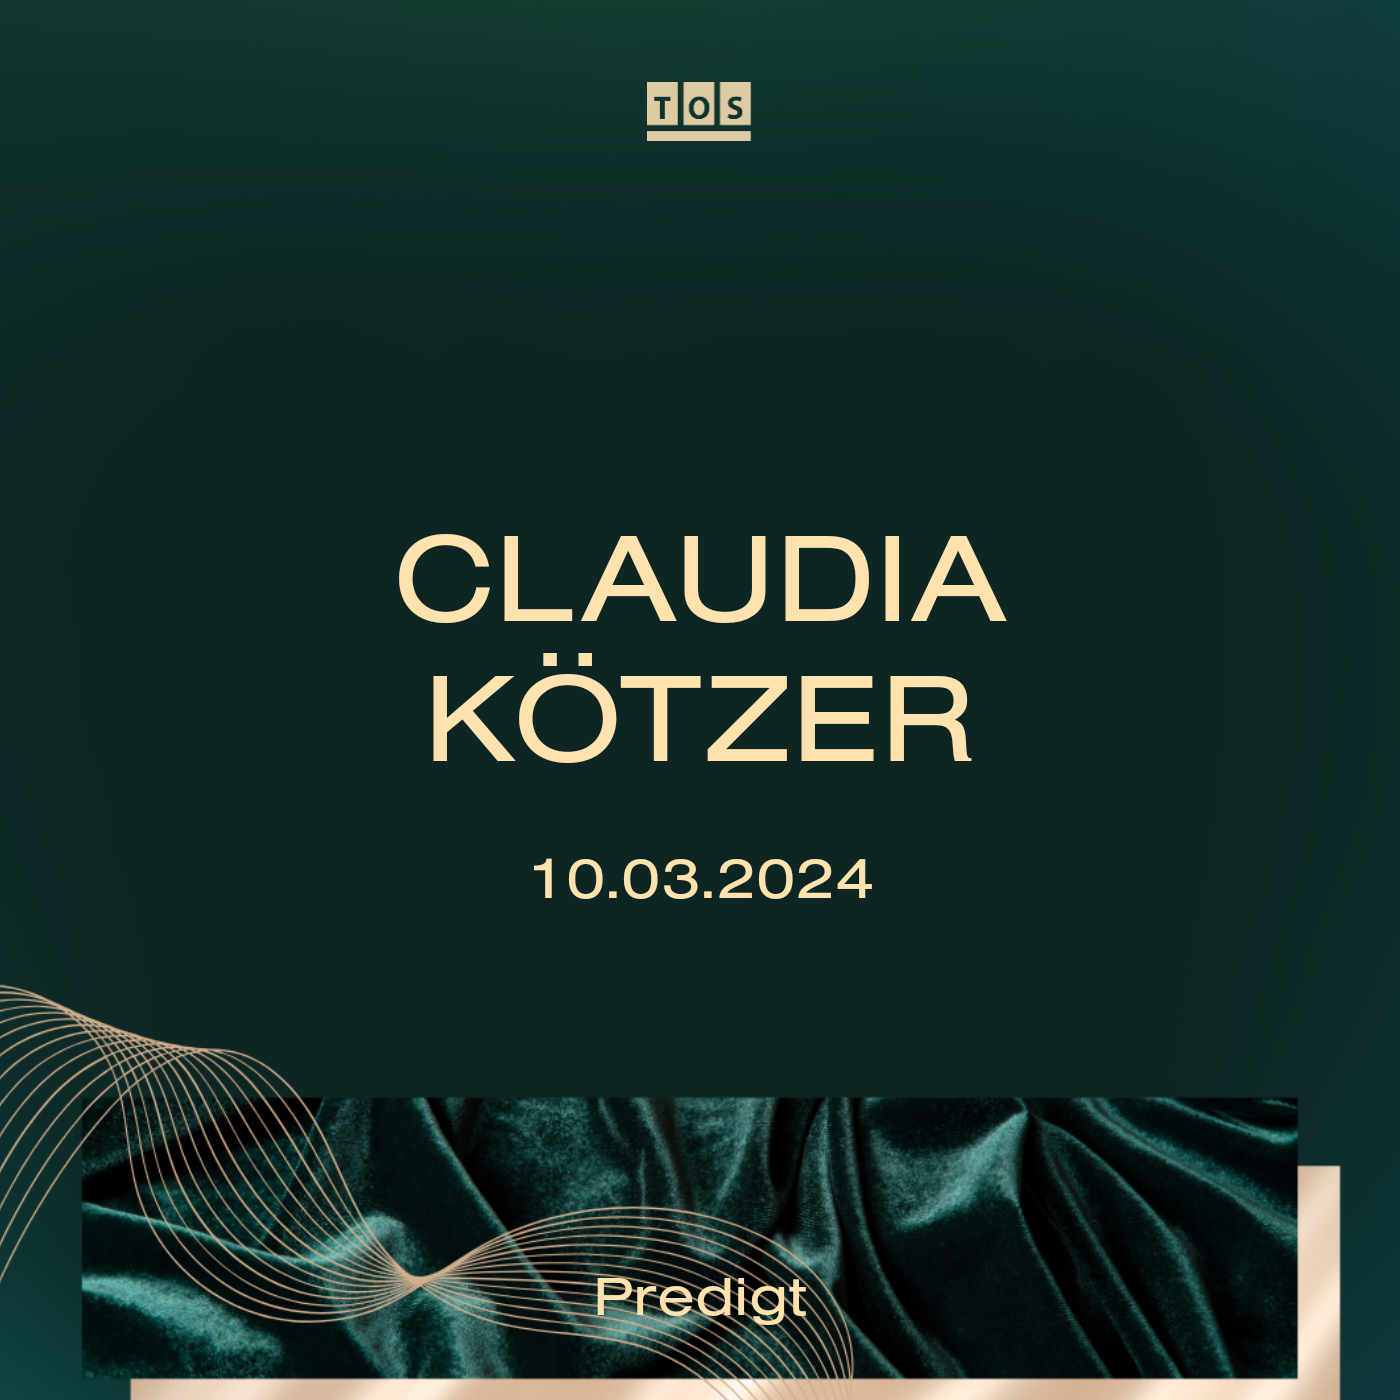 Claudia Kötzer | 10.03.2024 hero artwork